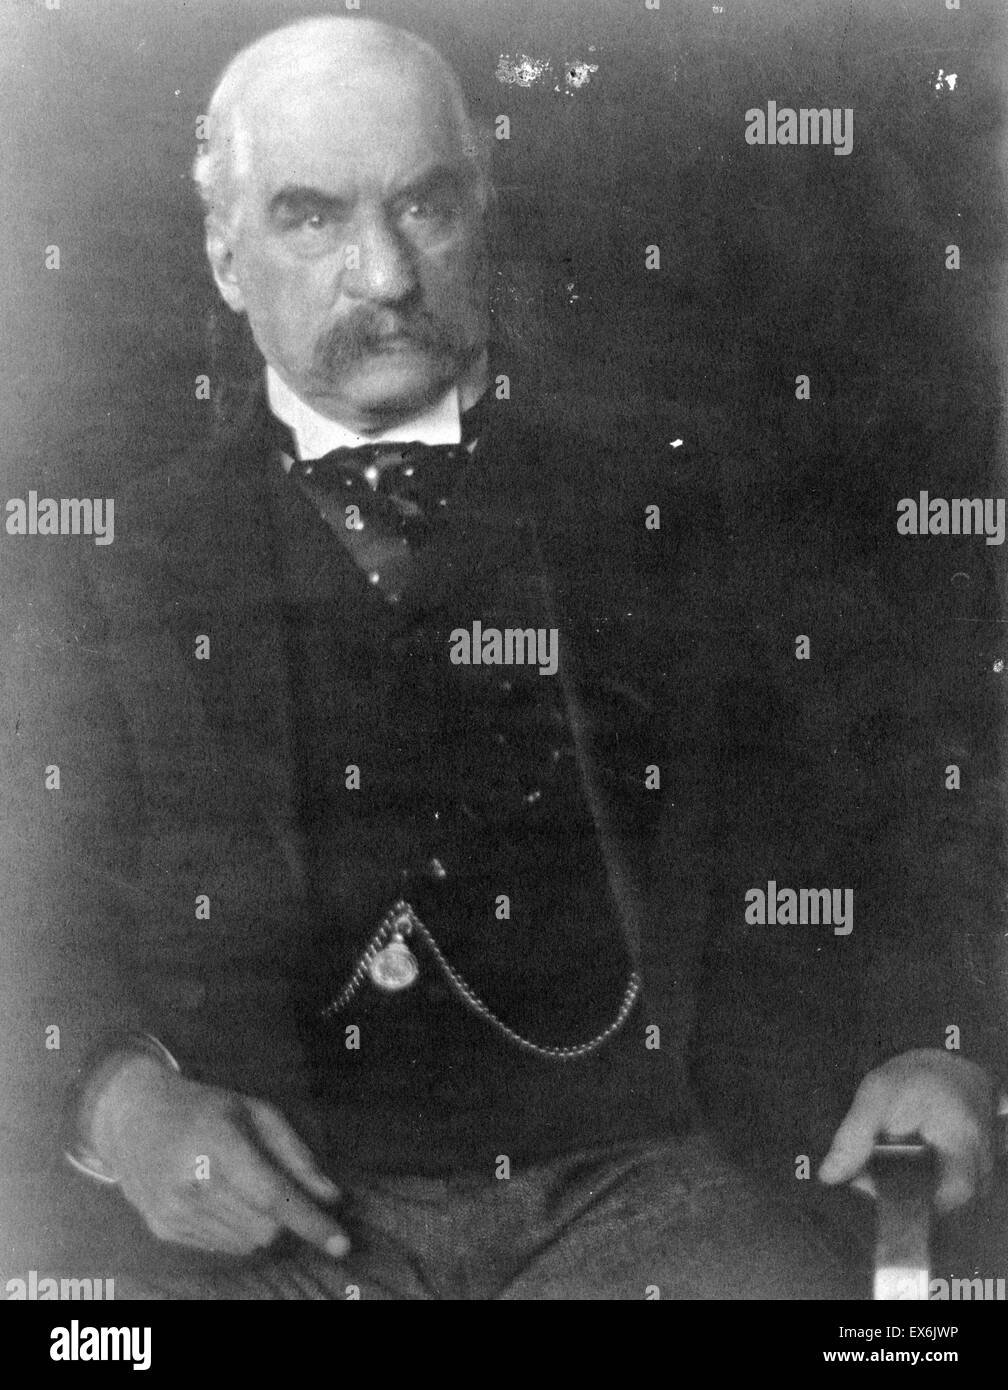 Photograph of John Pierpoint Morgan (1837-1913) American financier, banker, philanthropist and art collector. Photographed by Edward Steichen (1879-1973) Platinum print. Dated 1903 Stock Photo